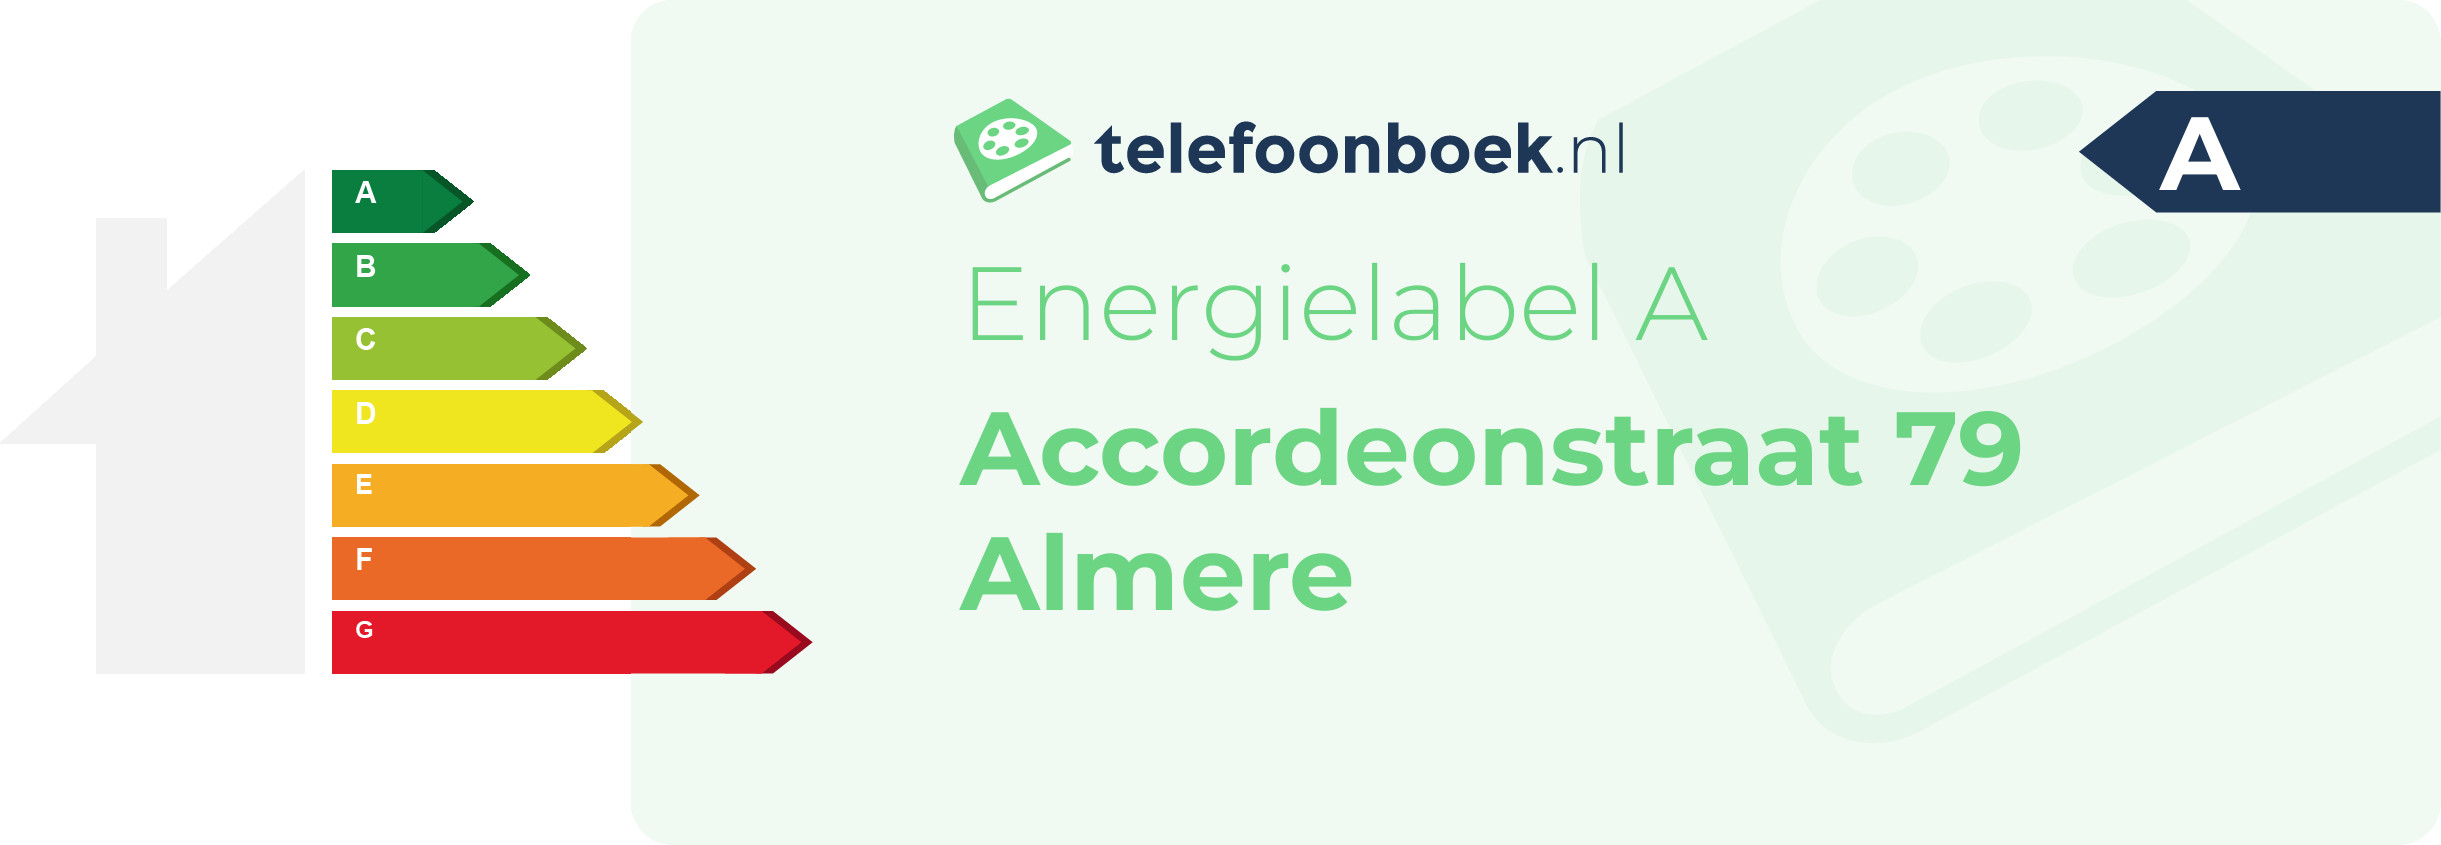 Energielabel Accordeonstraat 79 Almere